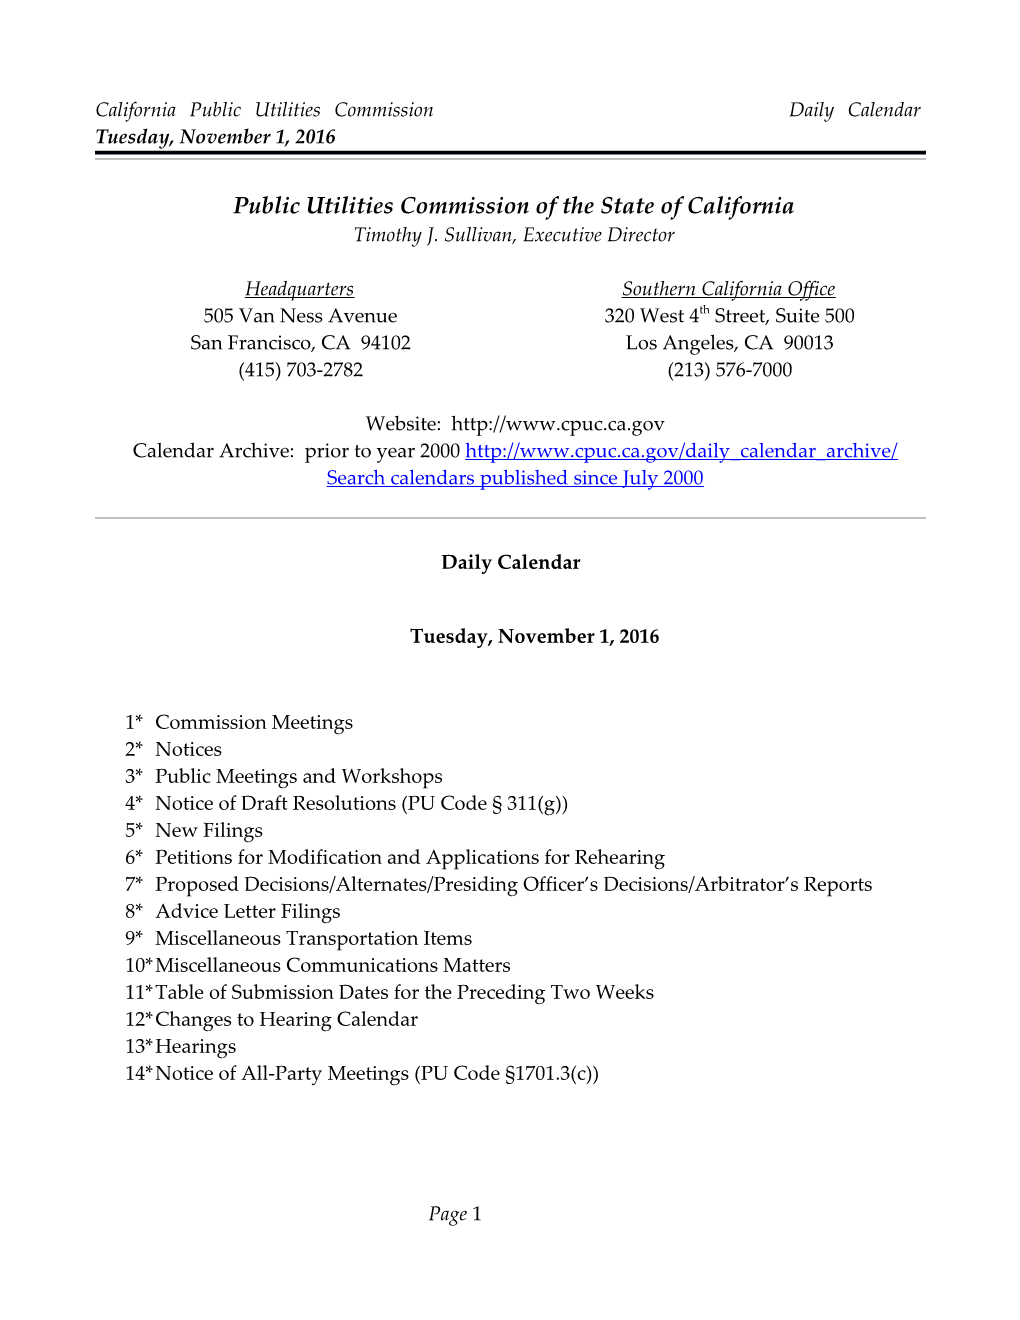 California Public Utilities Commission Daily Calendar Tuesday, November 1, 2016